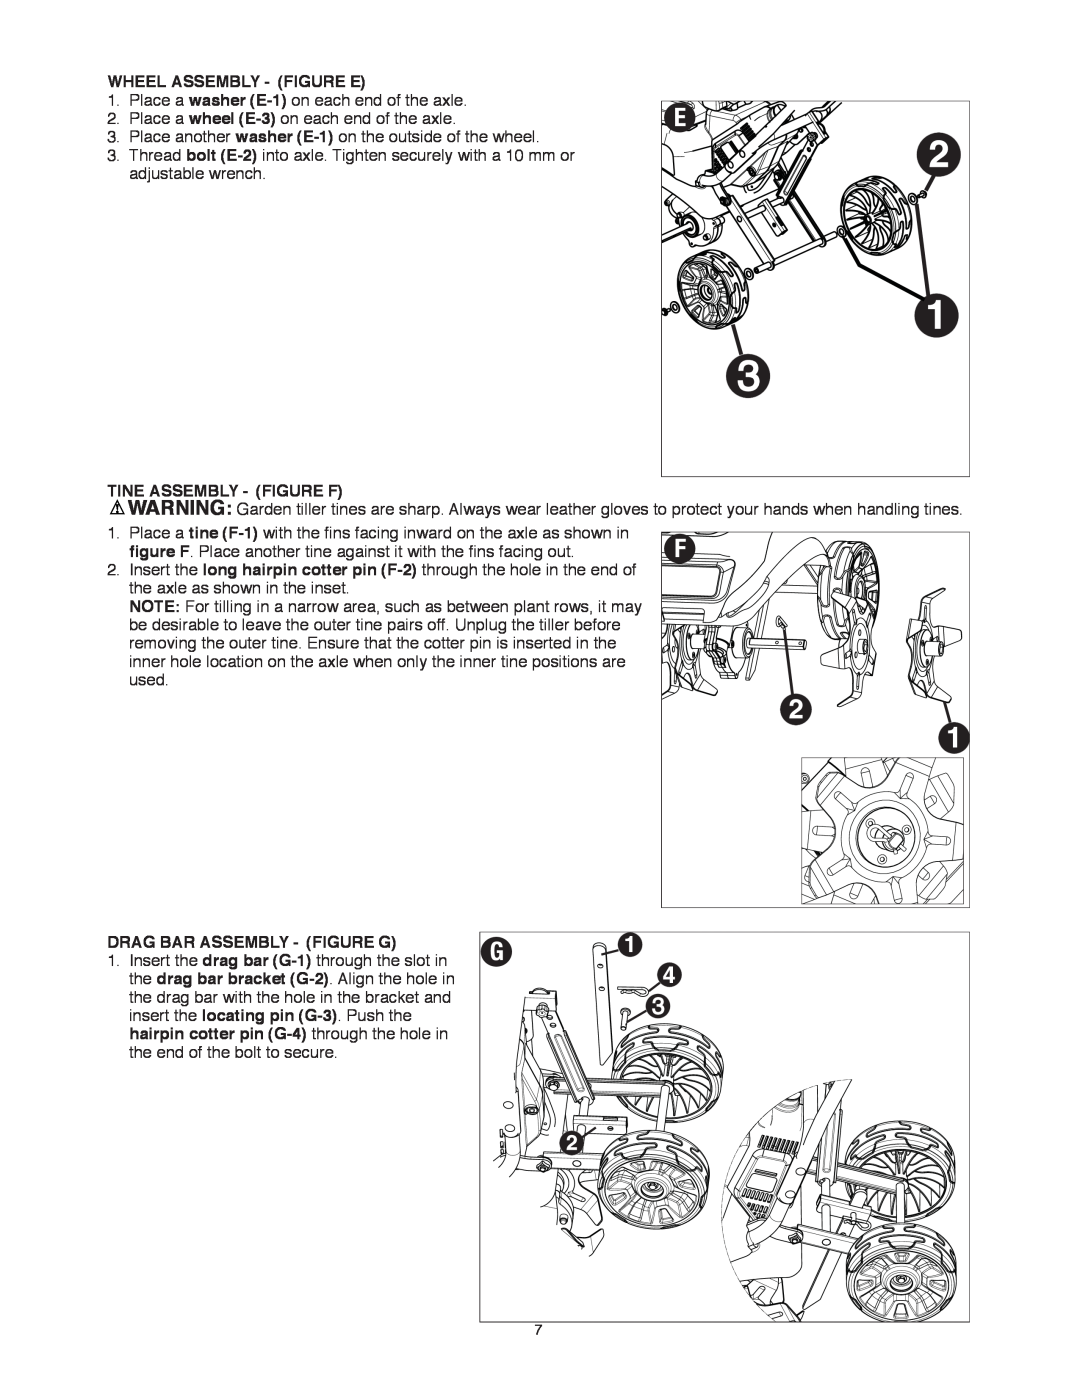 Black & Decker TL10 instruction manual Wheel Assembly - Figure E, Tine Assembly - Figure F, Drag Bar Assembly - Figure G 